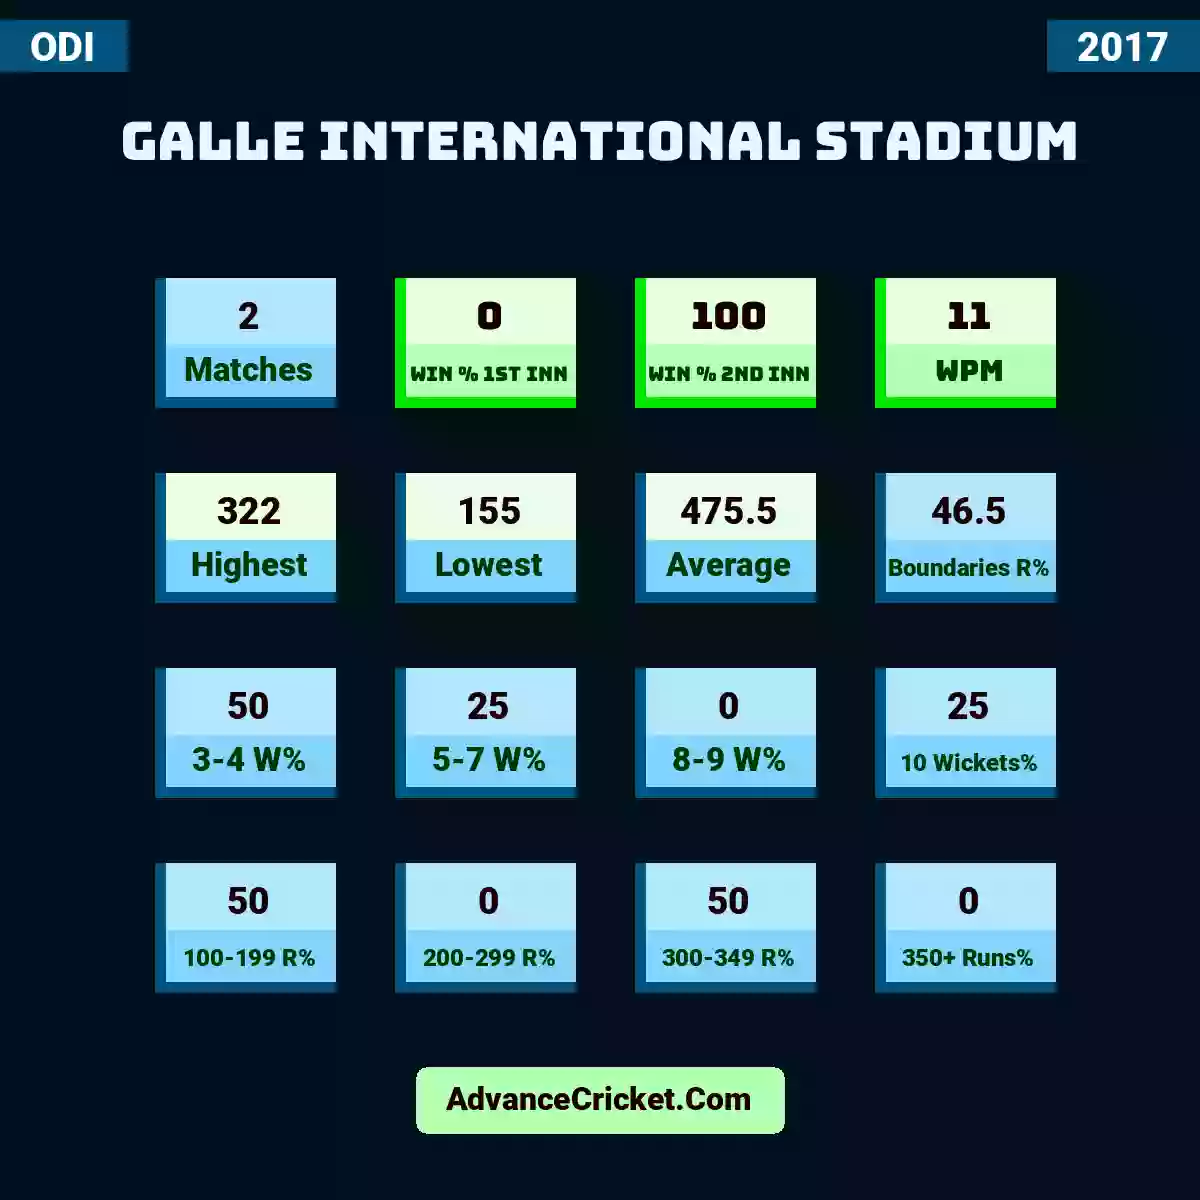 Image showing Galle International Stadium with Matches: 2, Win % 1st Inn: 0, Win % 2nd Inn: 100, WPM: 11, Highest: 322, Lowest: 155, Average: 475.5, Boundaries R%: 46.5, 3-4 W%: 50, 5-7 W%: 25, 8-9 W%: 0, 10 Wickets%: 25, 100-199 R%: 50, 200-299 R%: 0, 300-349 R%: 50, 350+ Runs%: 0.